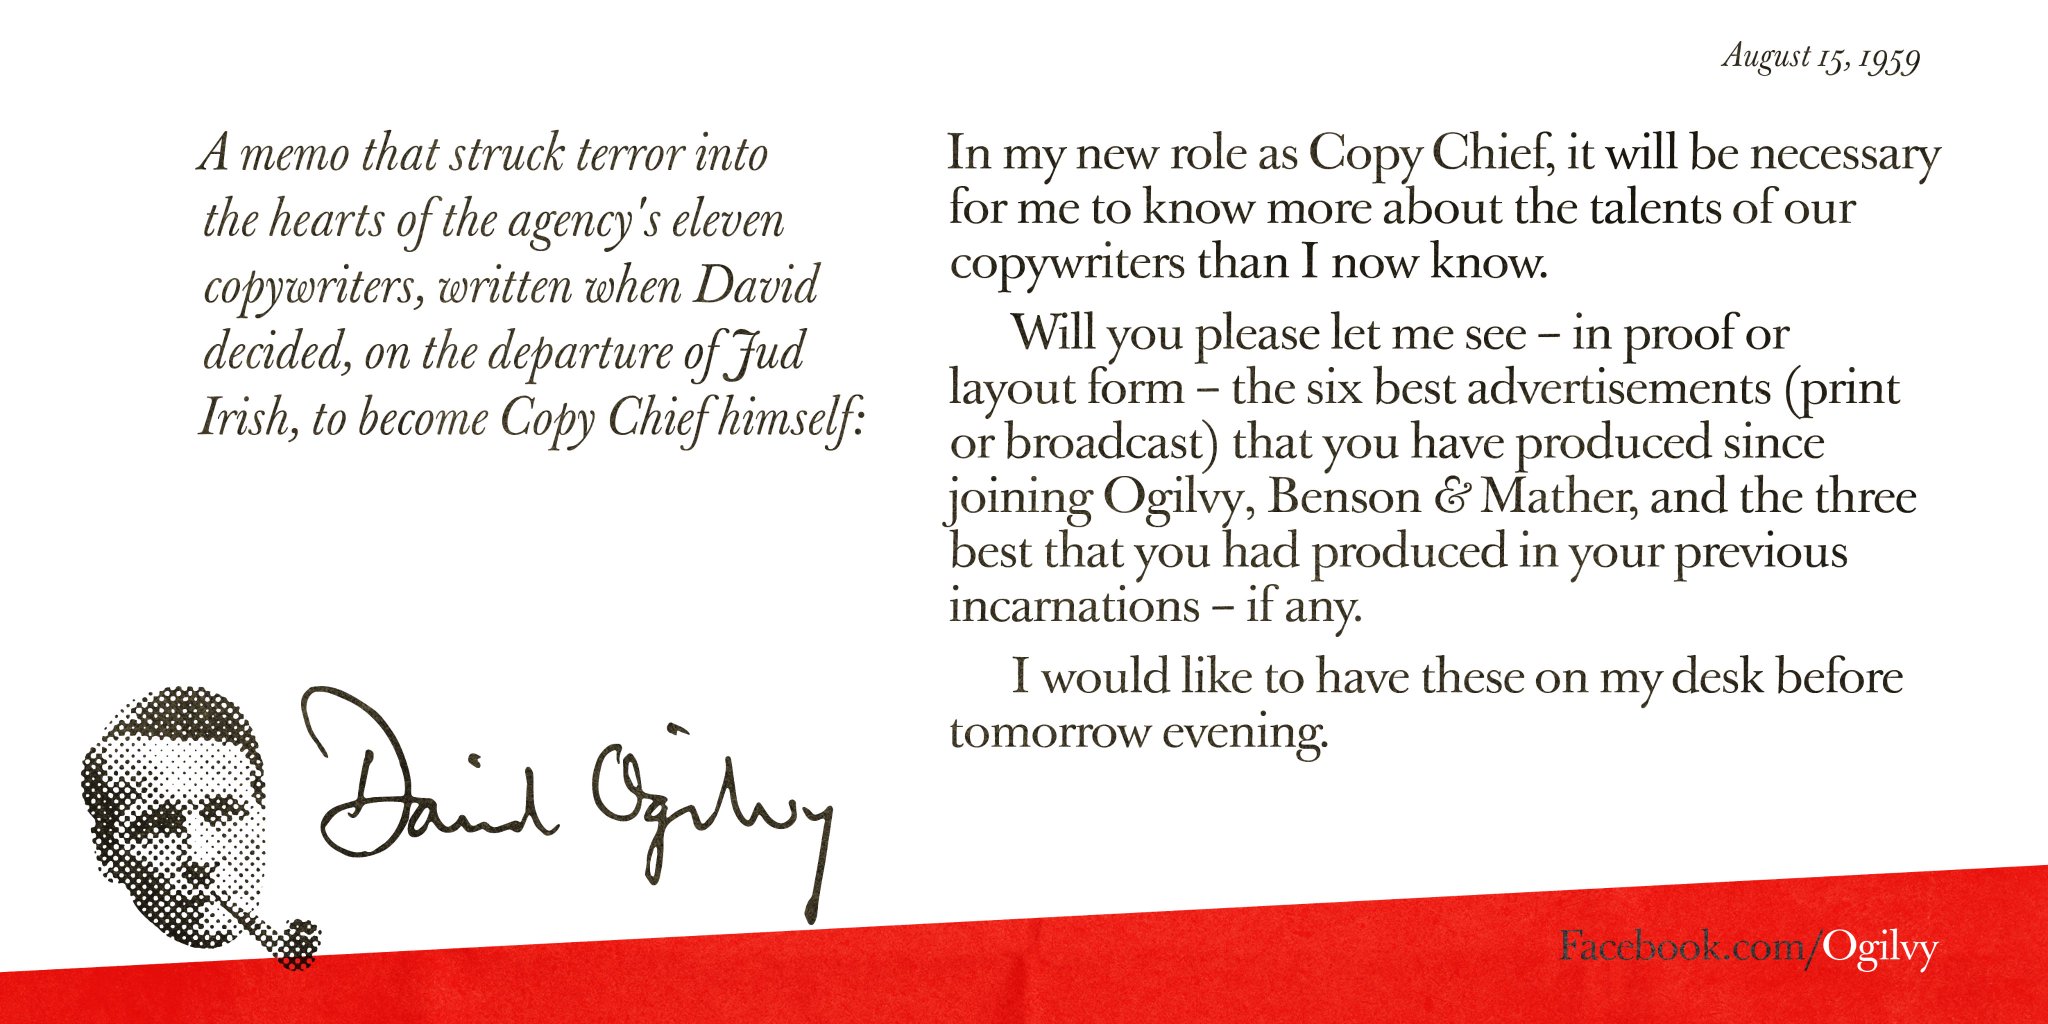 Ogilvy - 58 years ago today, #DavidOgilvy sent this memo